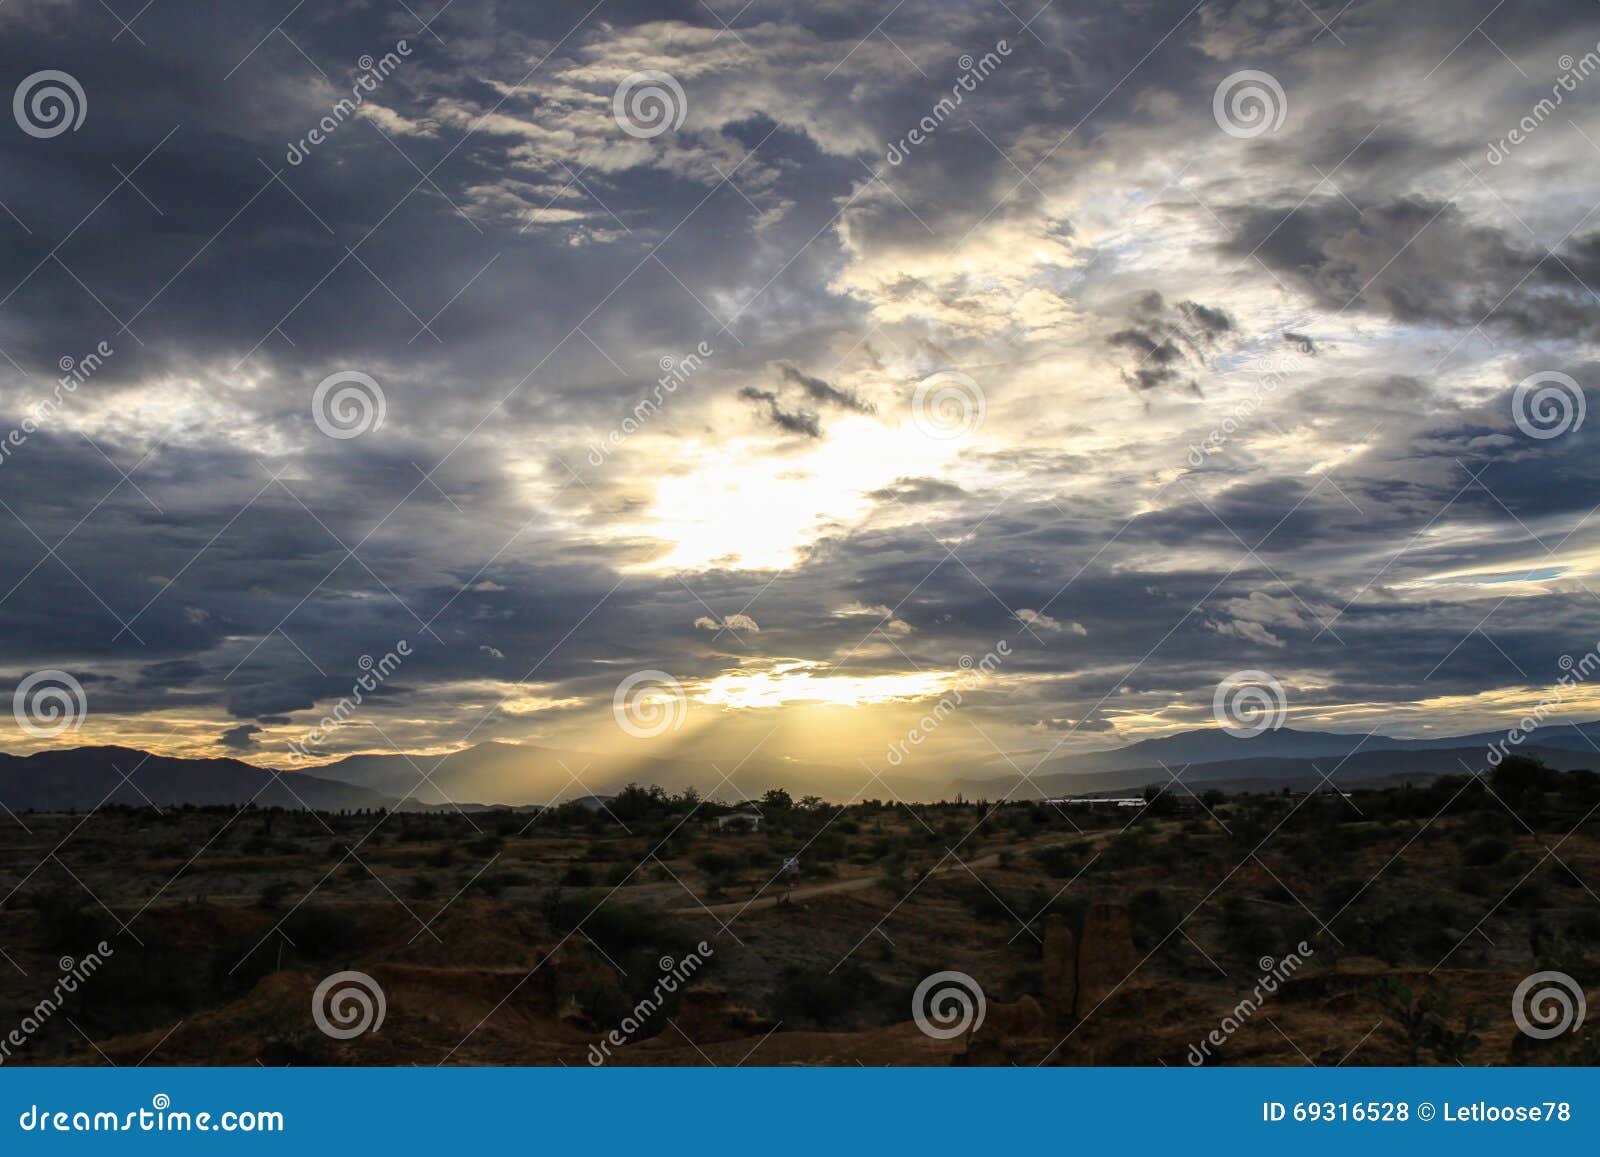 sky before the storm, tatacoa desert, colombia